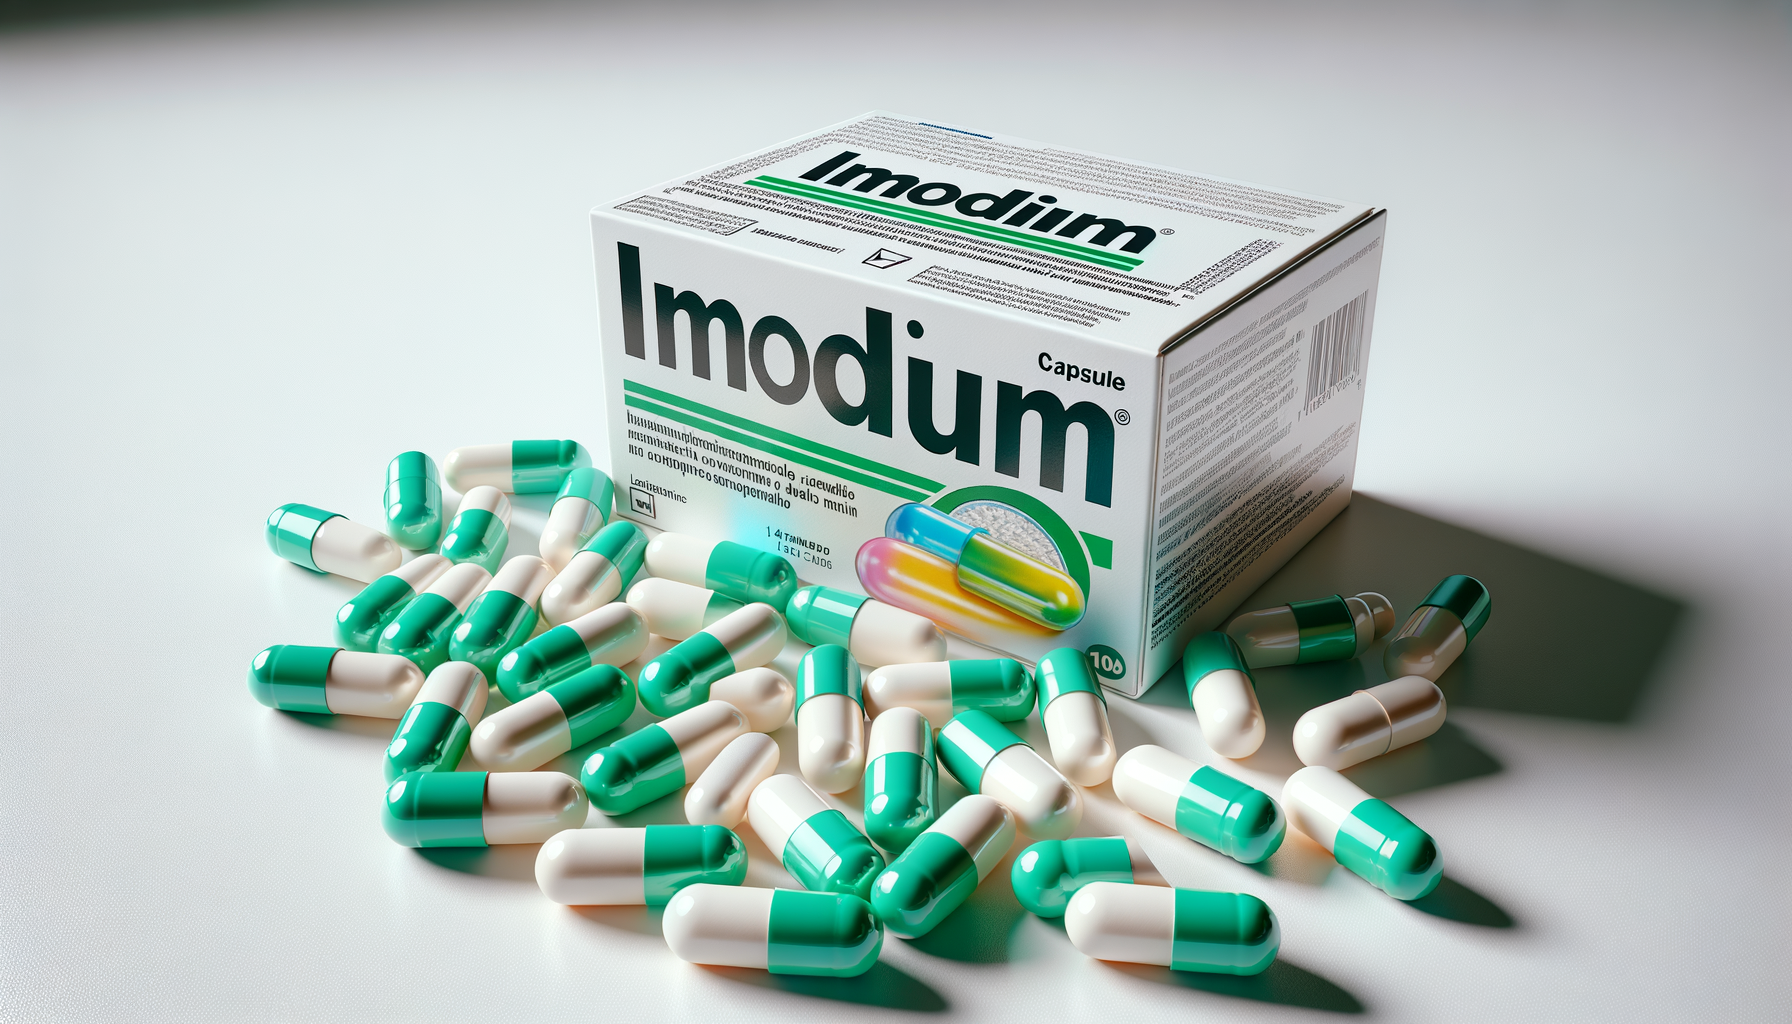 A cosa serve Imodium?